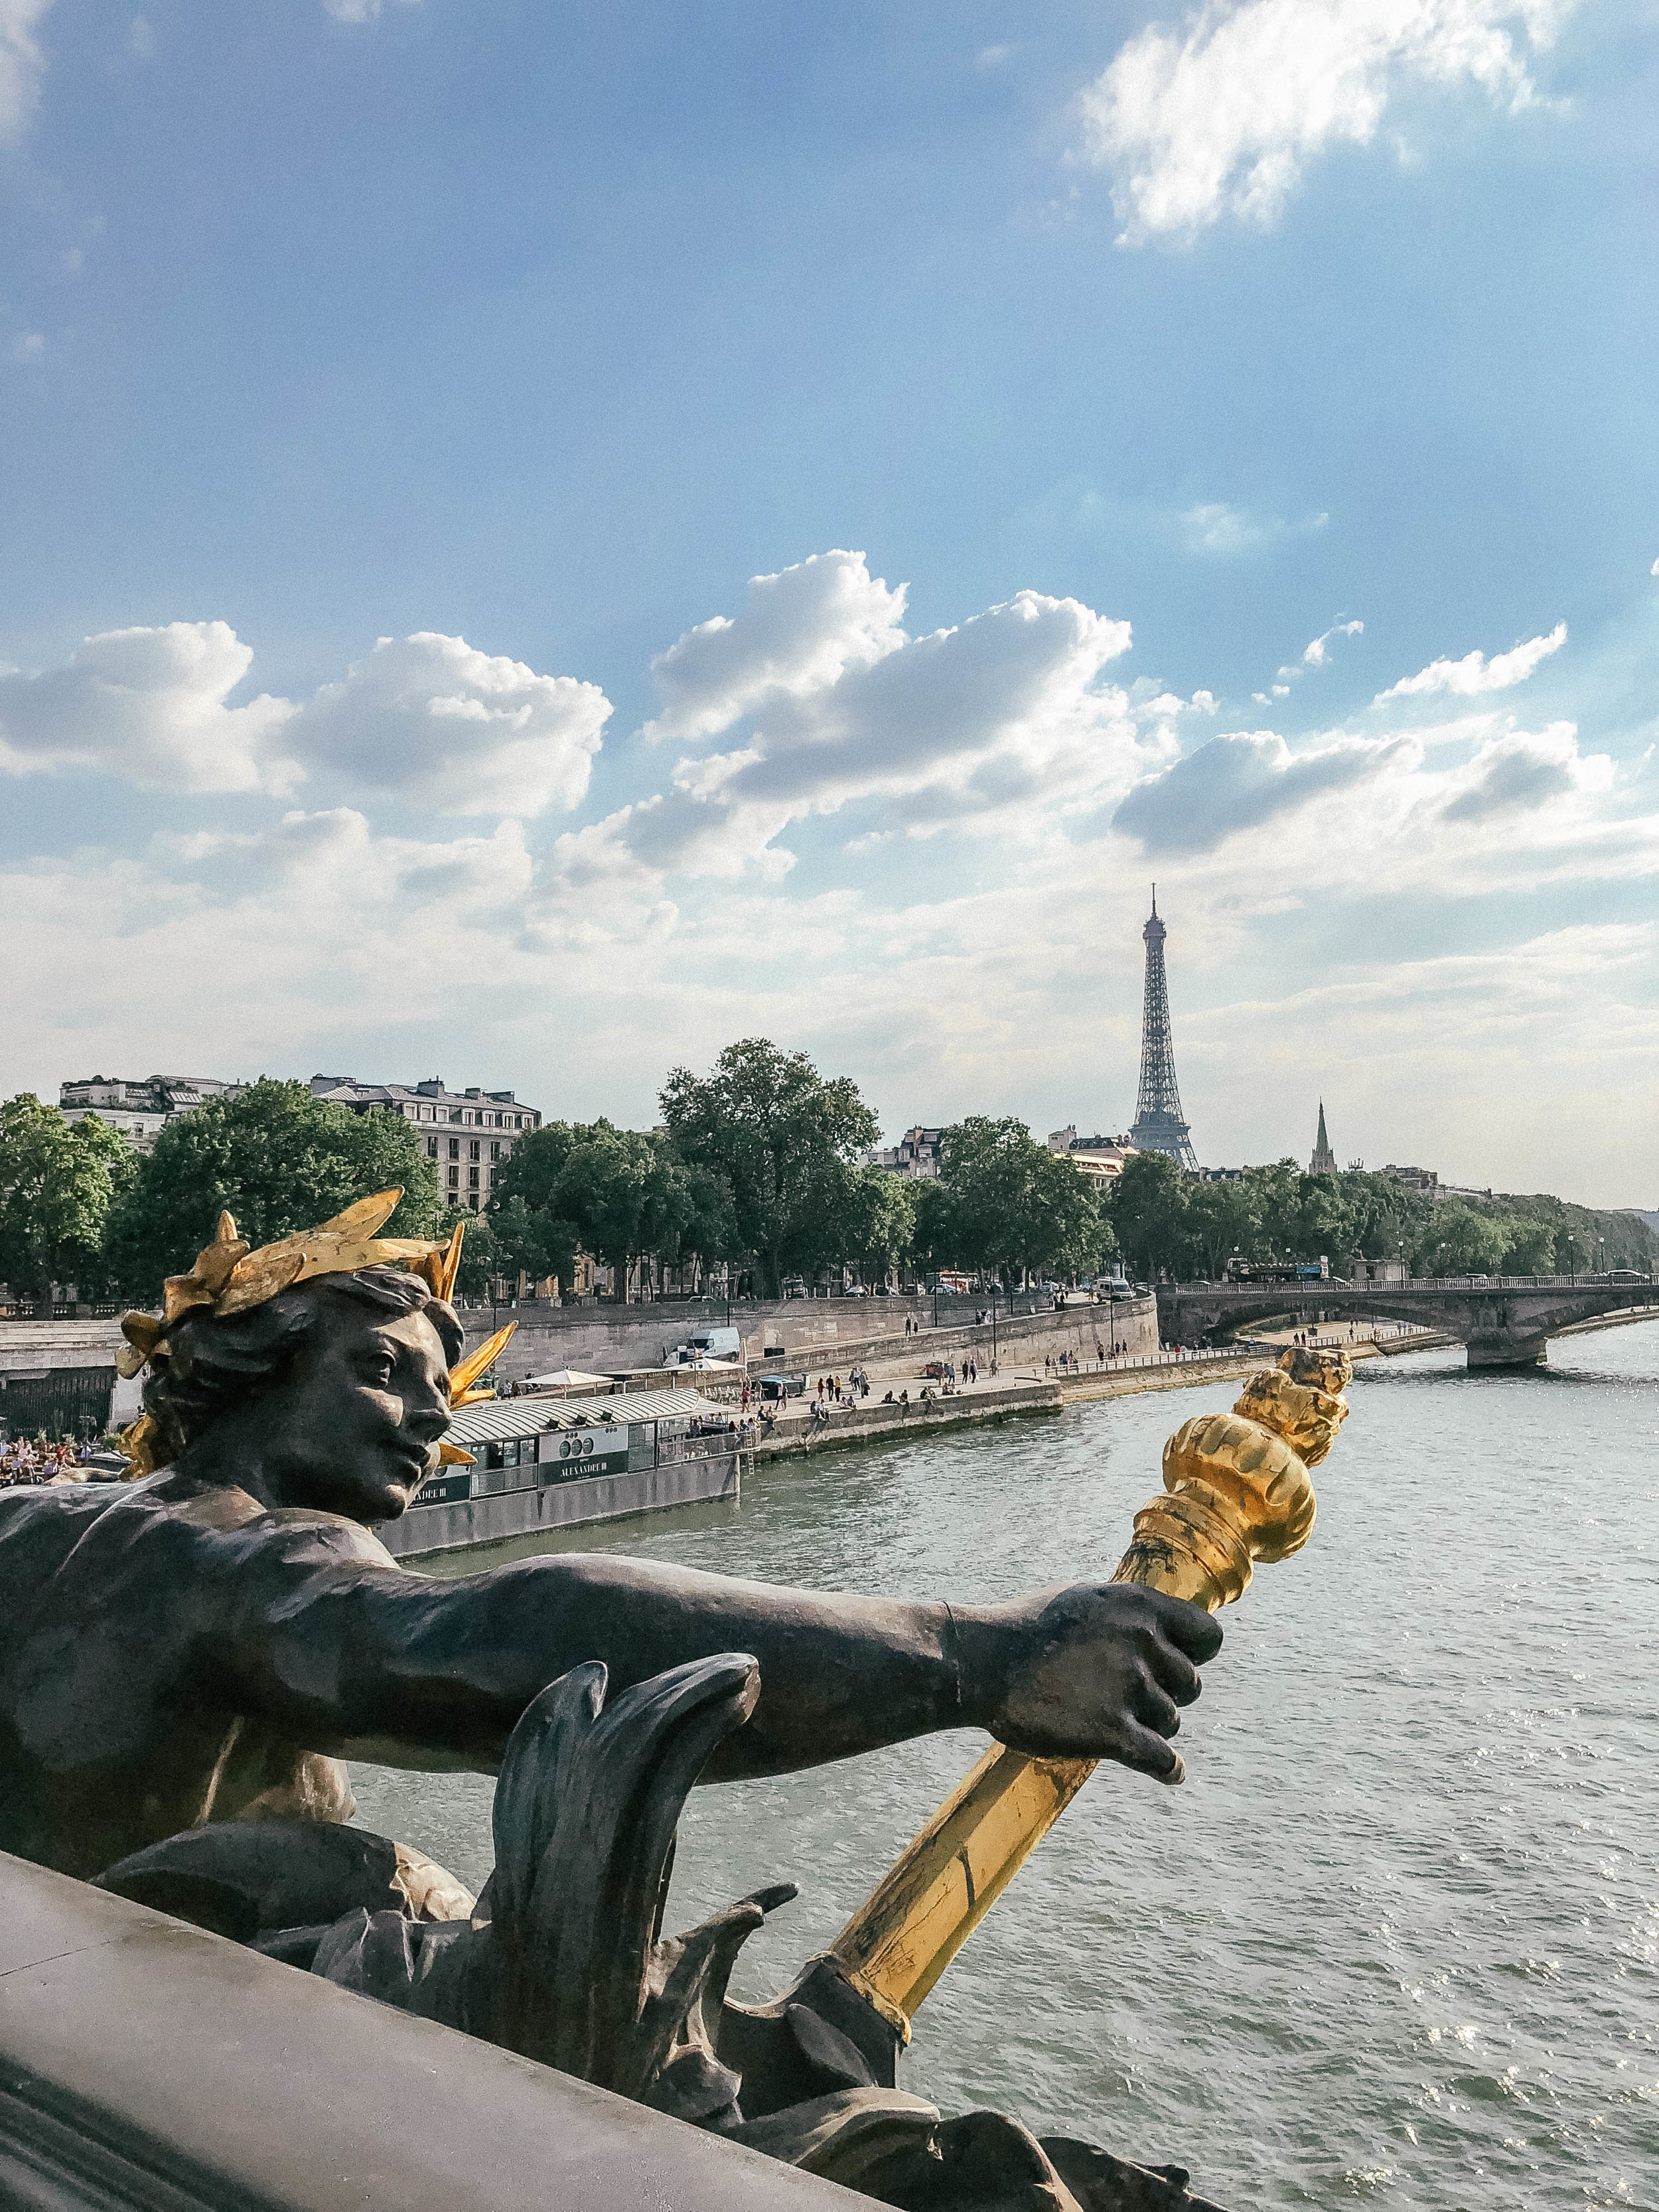 Alexandre III Bridge Statues - Eiffel Tower / Tour Eiffel - Paris - France